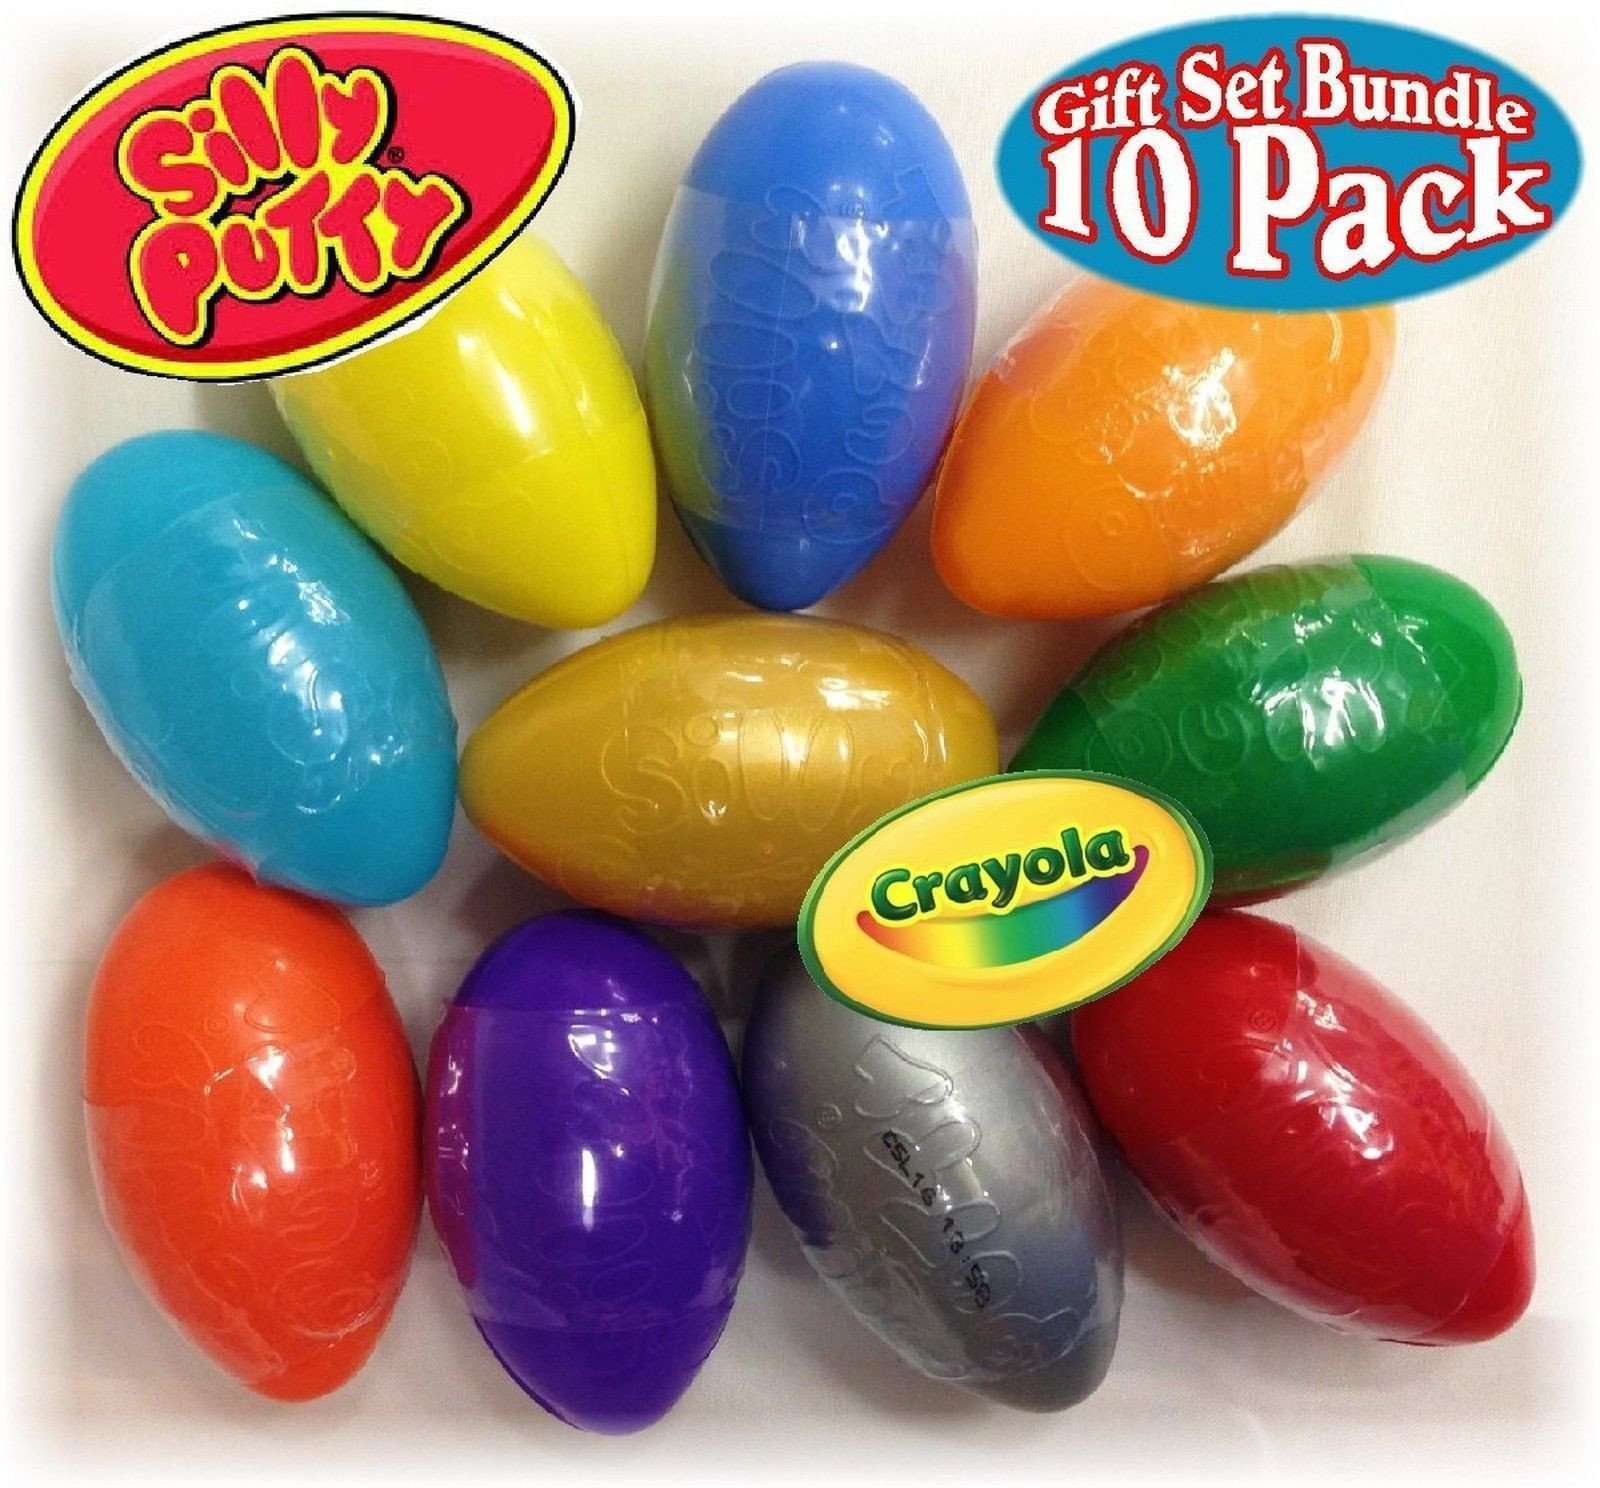 Crayola Silly Putty Gift Set - 10 Pack Bundle Original Metallic